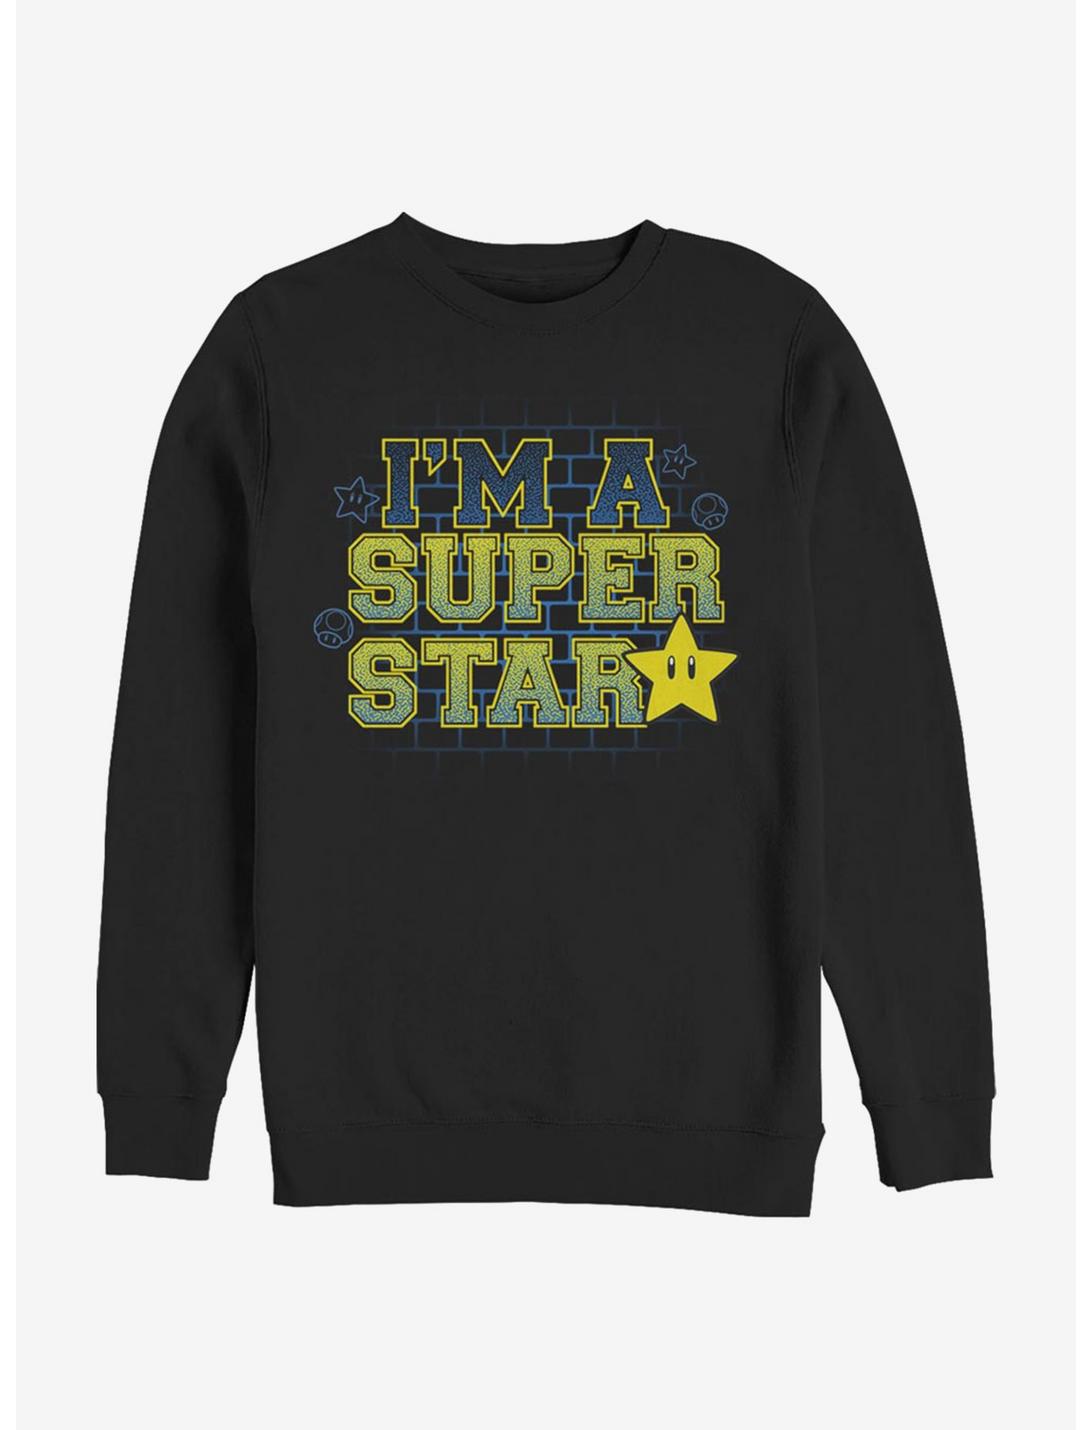 Nintendo Super Mario Super Star Sweatshirt, BLACK, hi-res